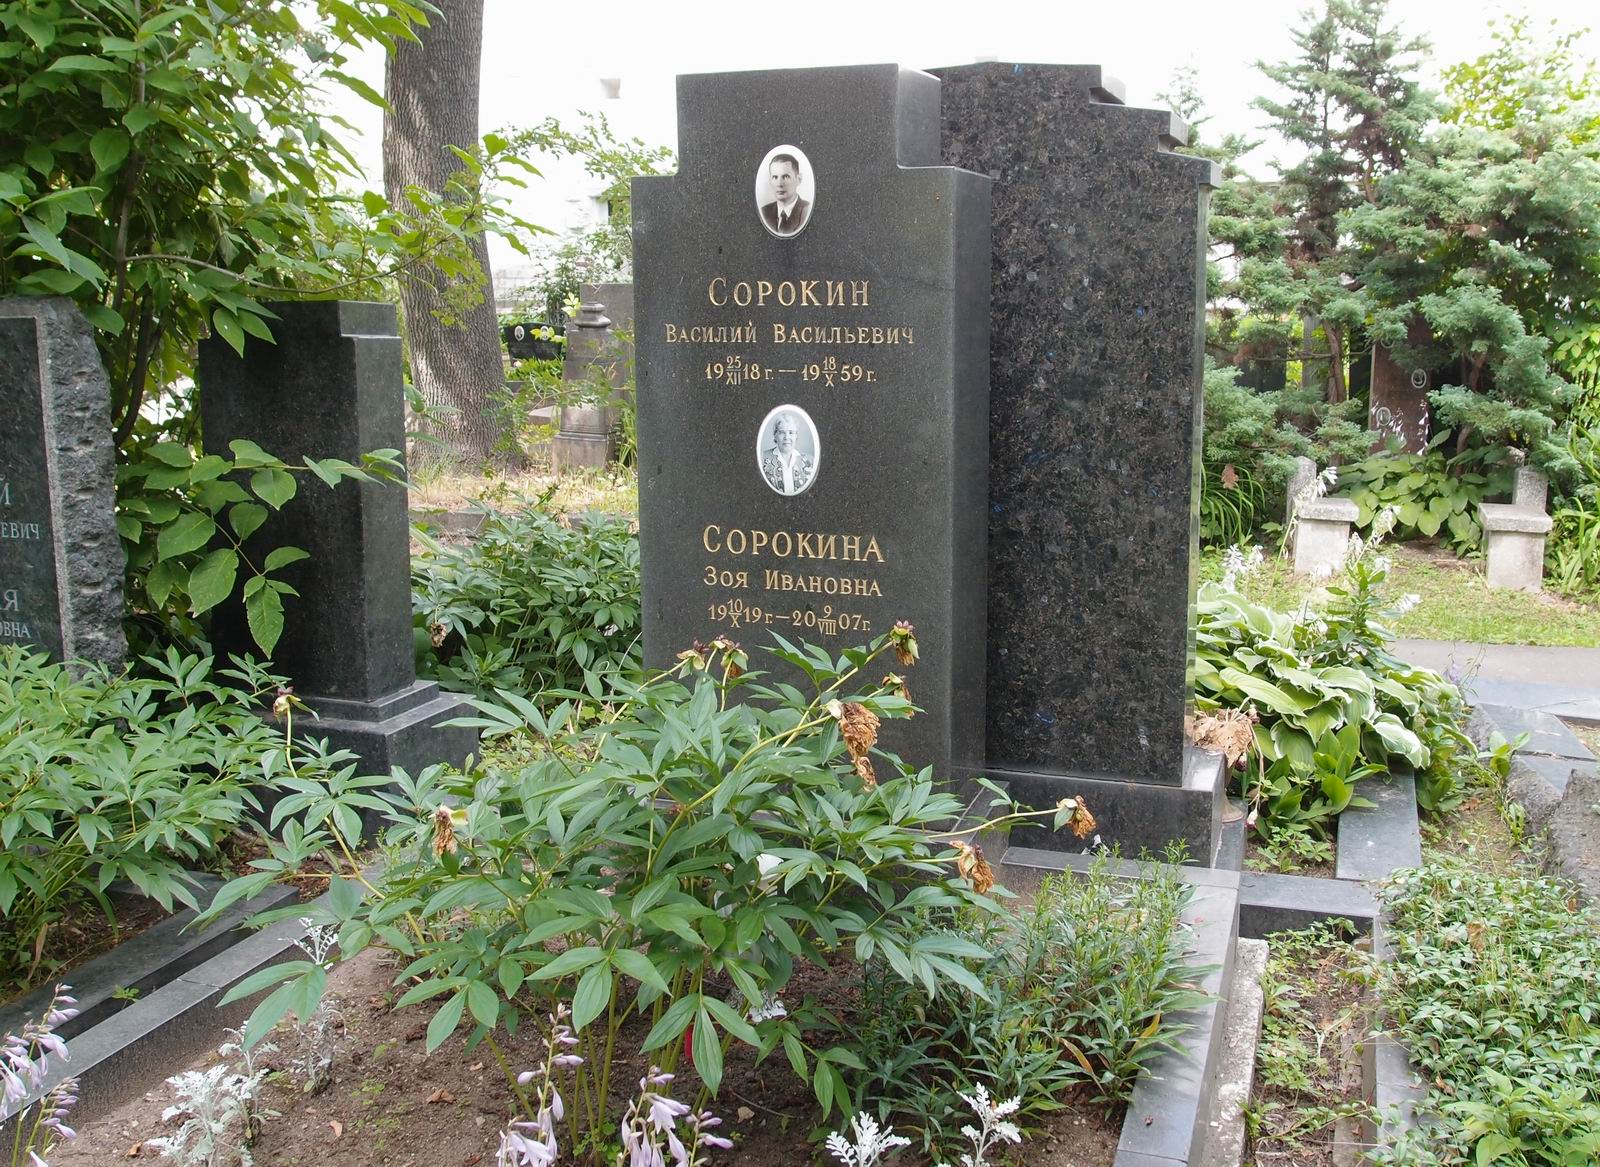 Памятник на могиле Сорокина В.В. (1918-1959), на Новодевичьем кладбище (3-61-22).